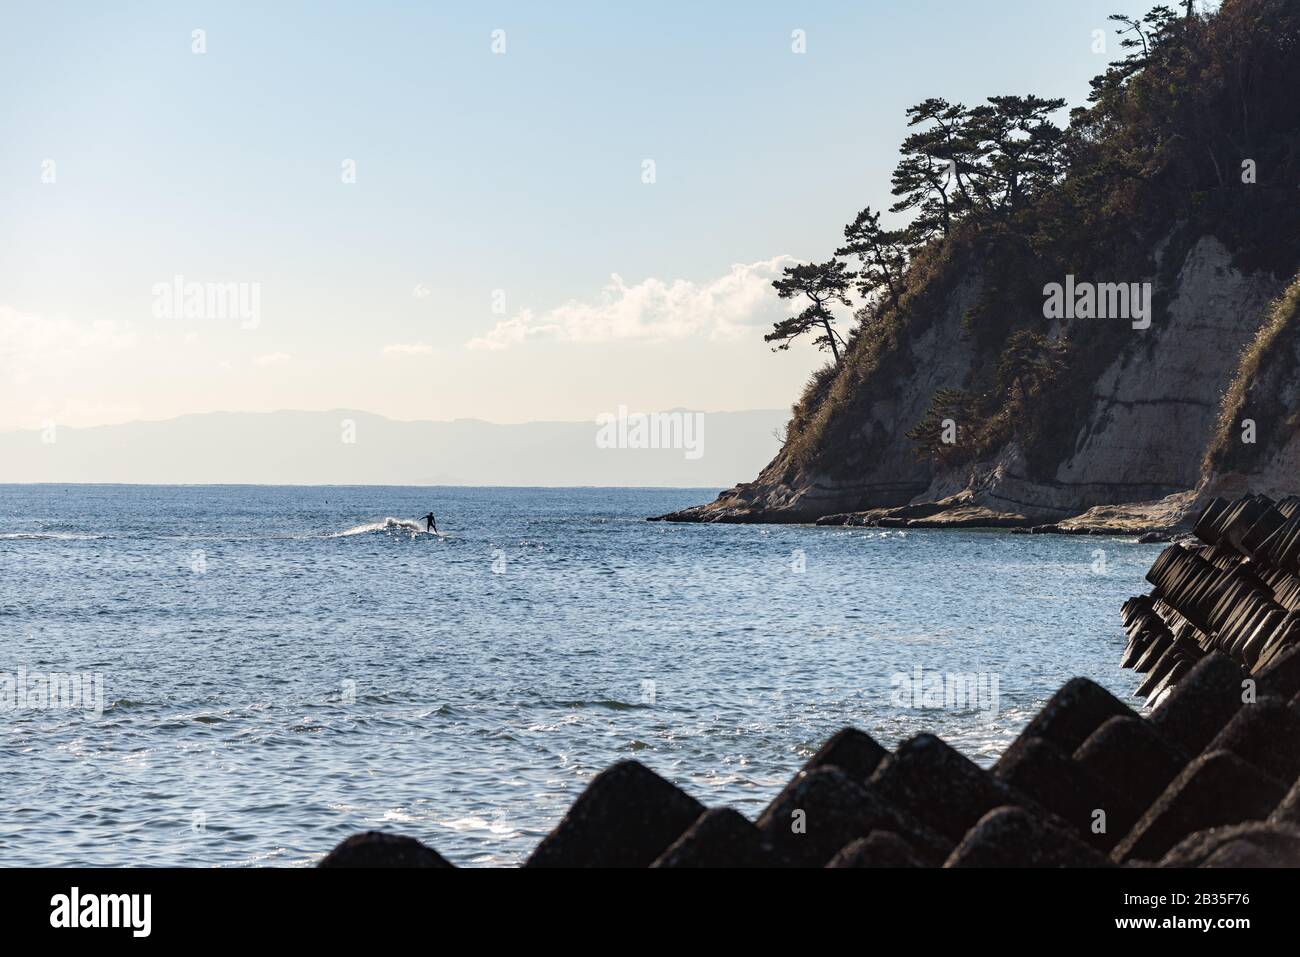 A surfer rides a wave towards Cape Imamuragasaki, Sagami Bay, close to Enoshima Island, setting of the Tokyo 2020 Summer Olympics sailing events Stock Photo